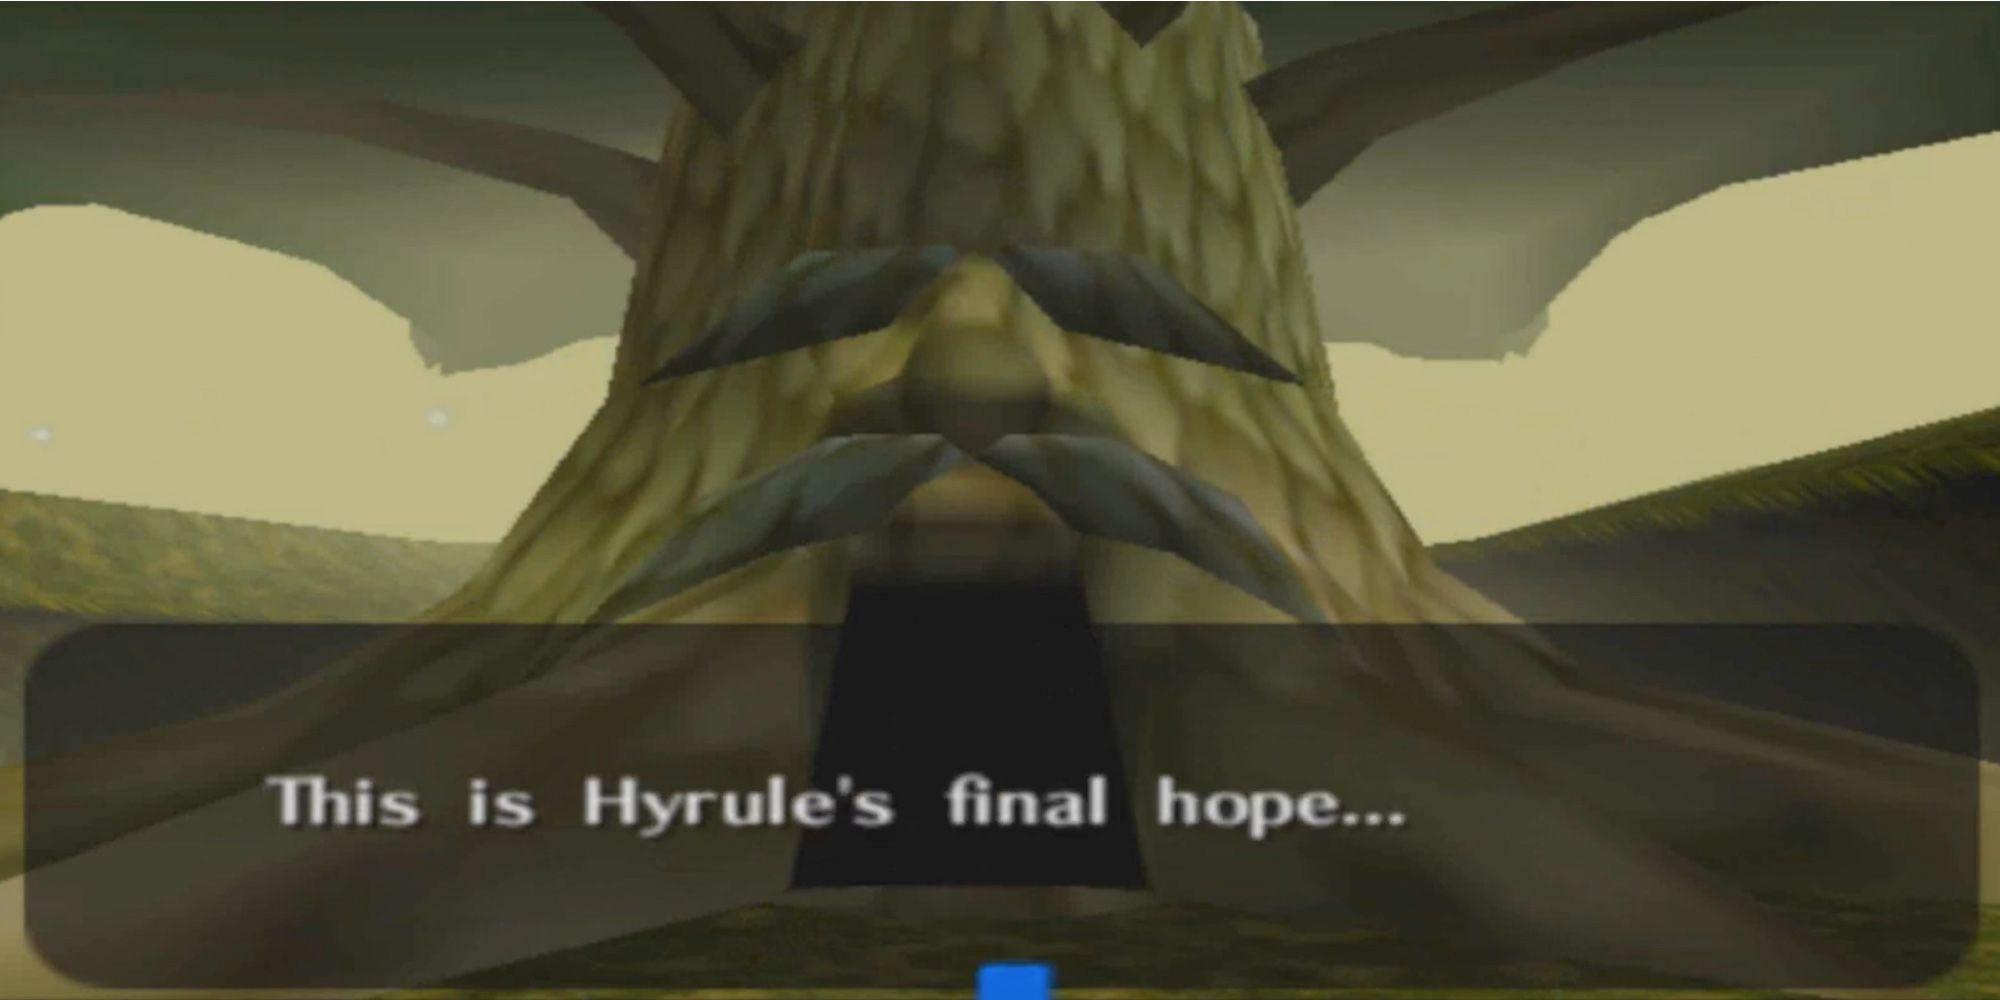 Legend of Zelda - Ocarina of Time - The Great Deku Tree speaks